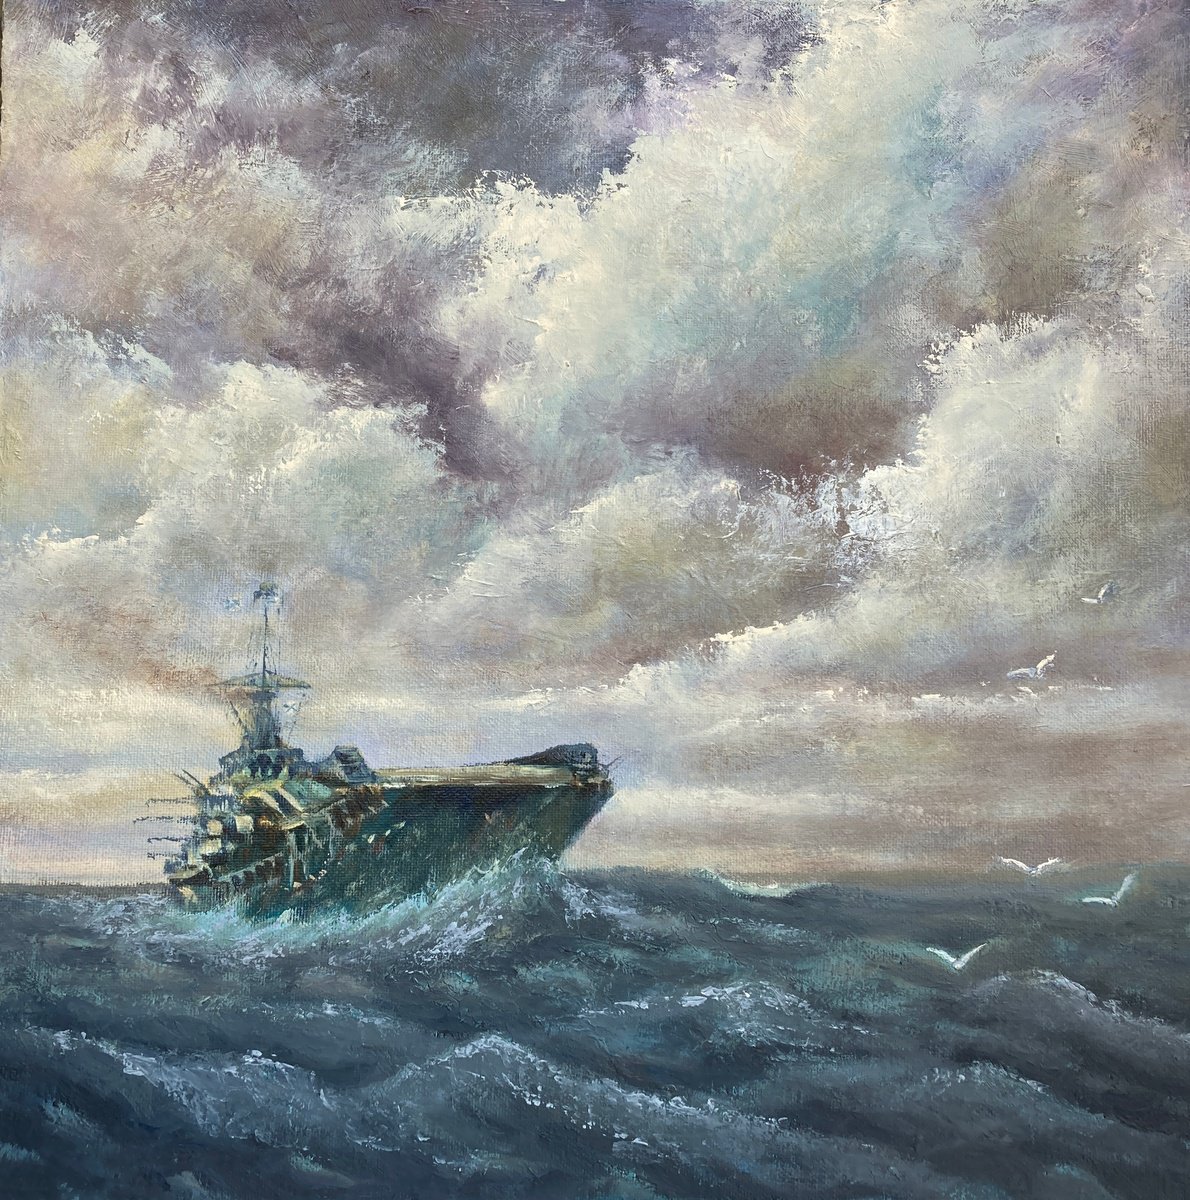 WW2 Ark Royal by David Mather